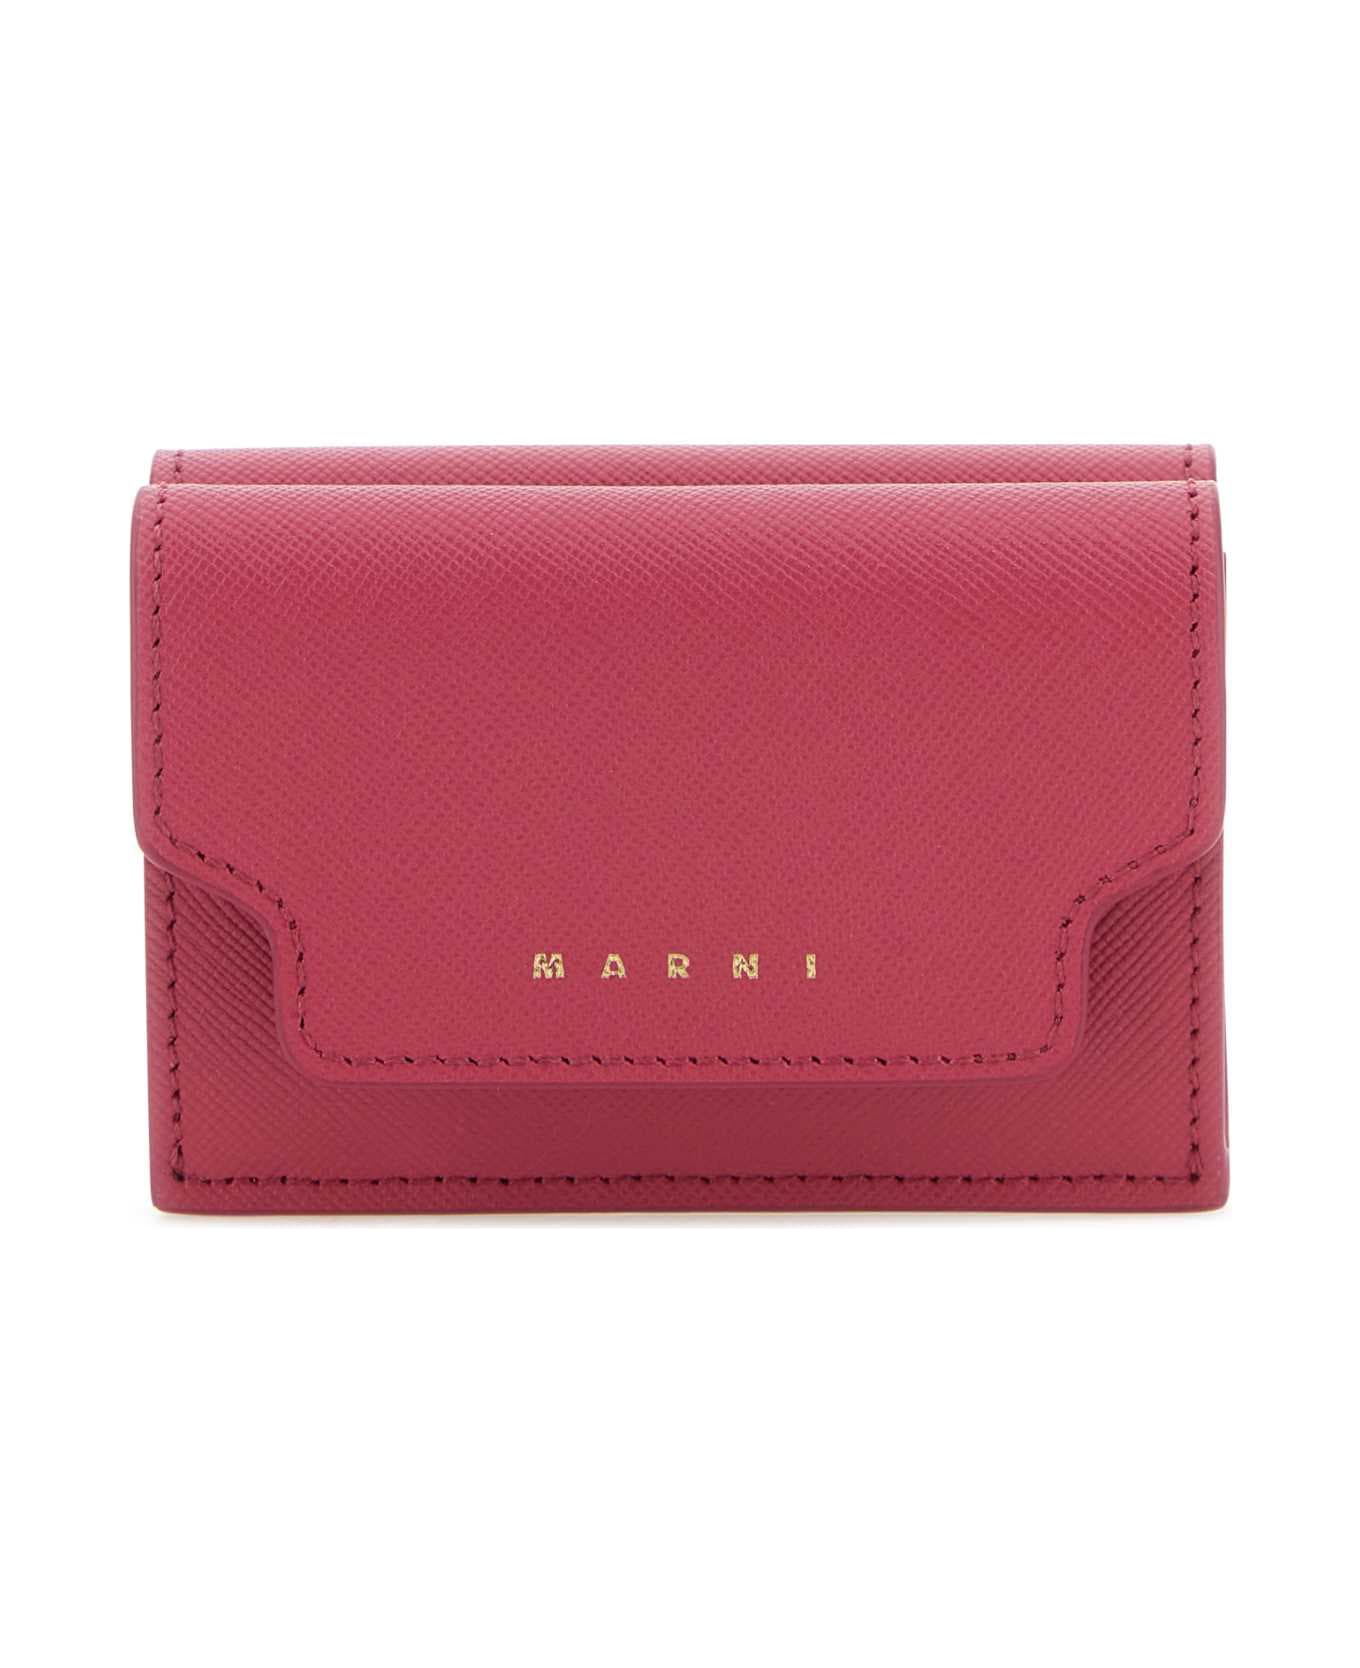 Marni Tyrian Purple Leather Wallet - LIGHTORCHID